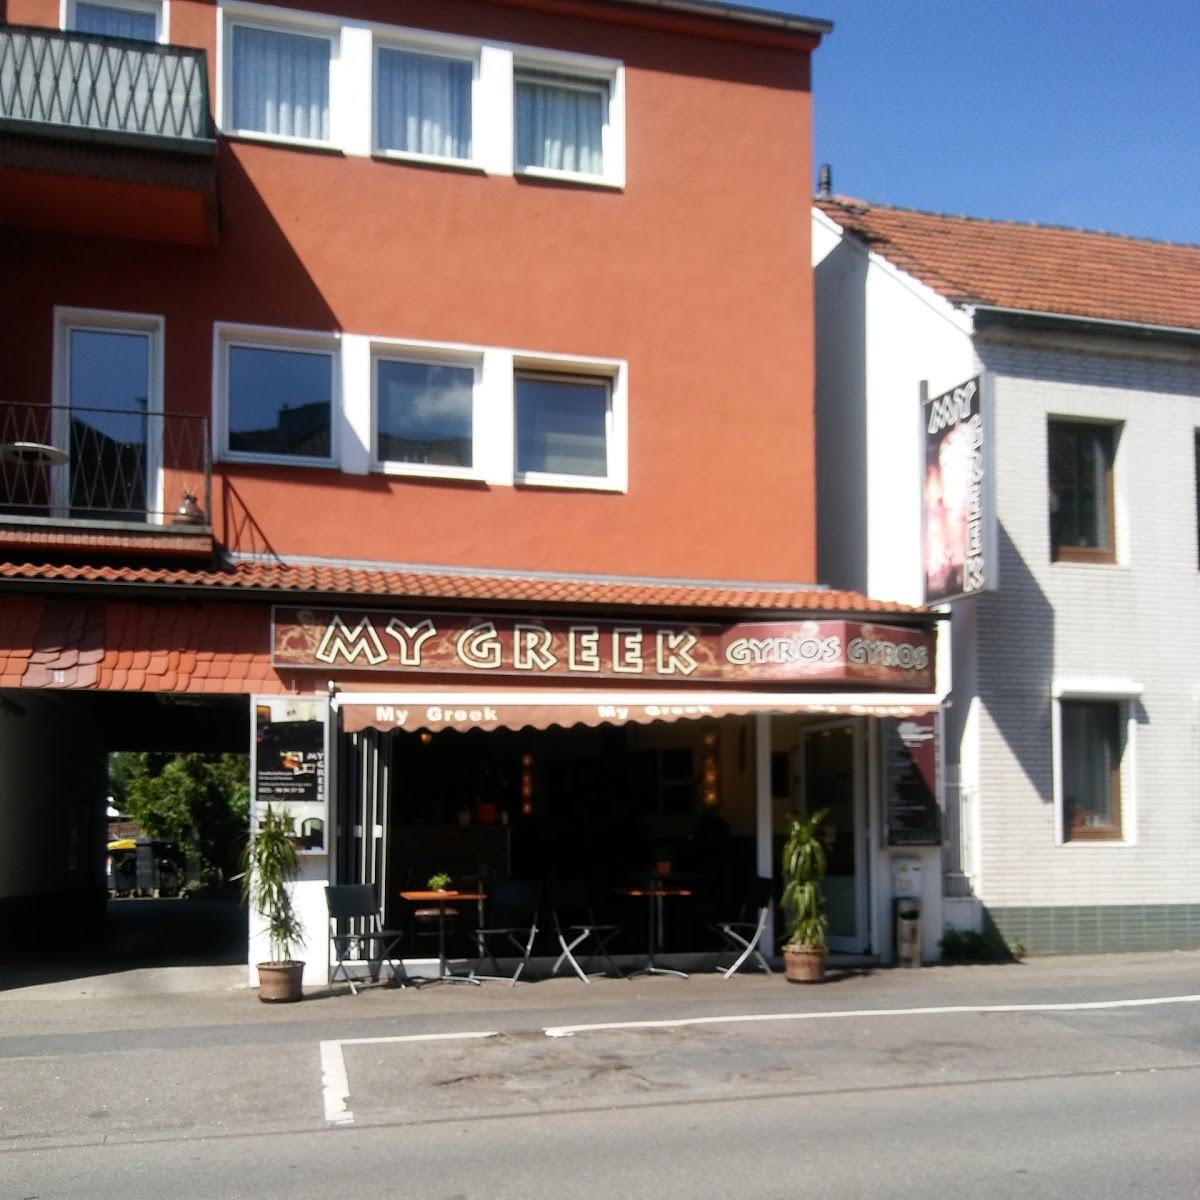 Restaurant "My Greek Inh. Stavros Vanias" in Köln